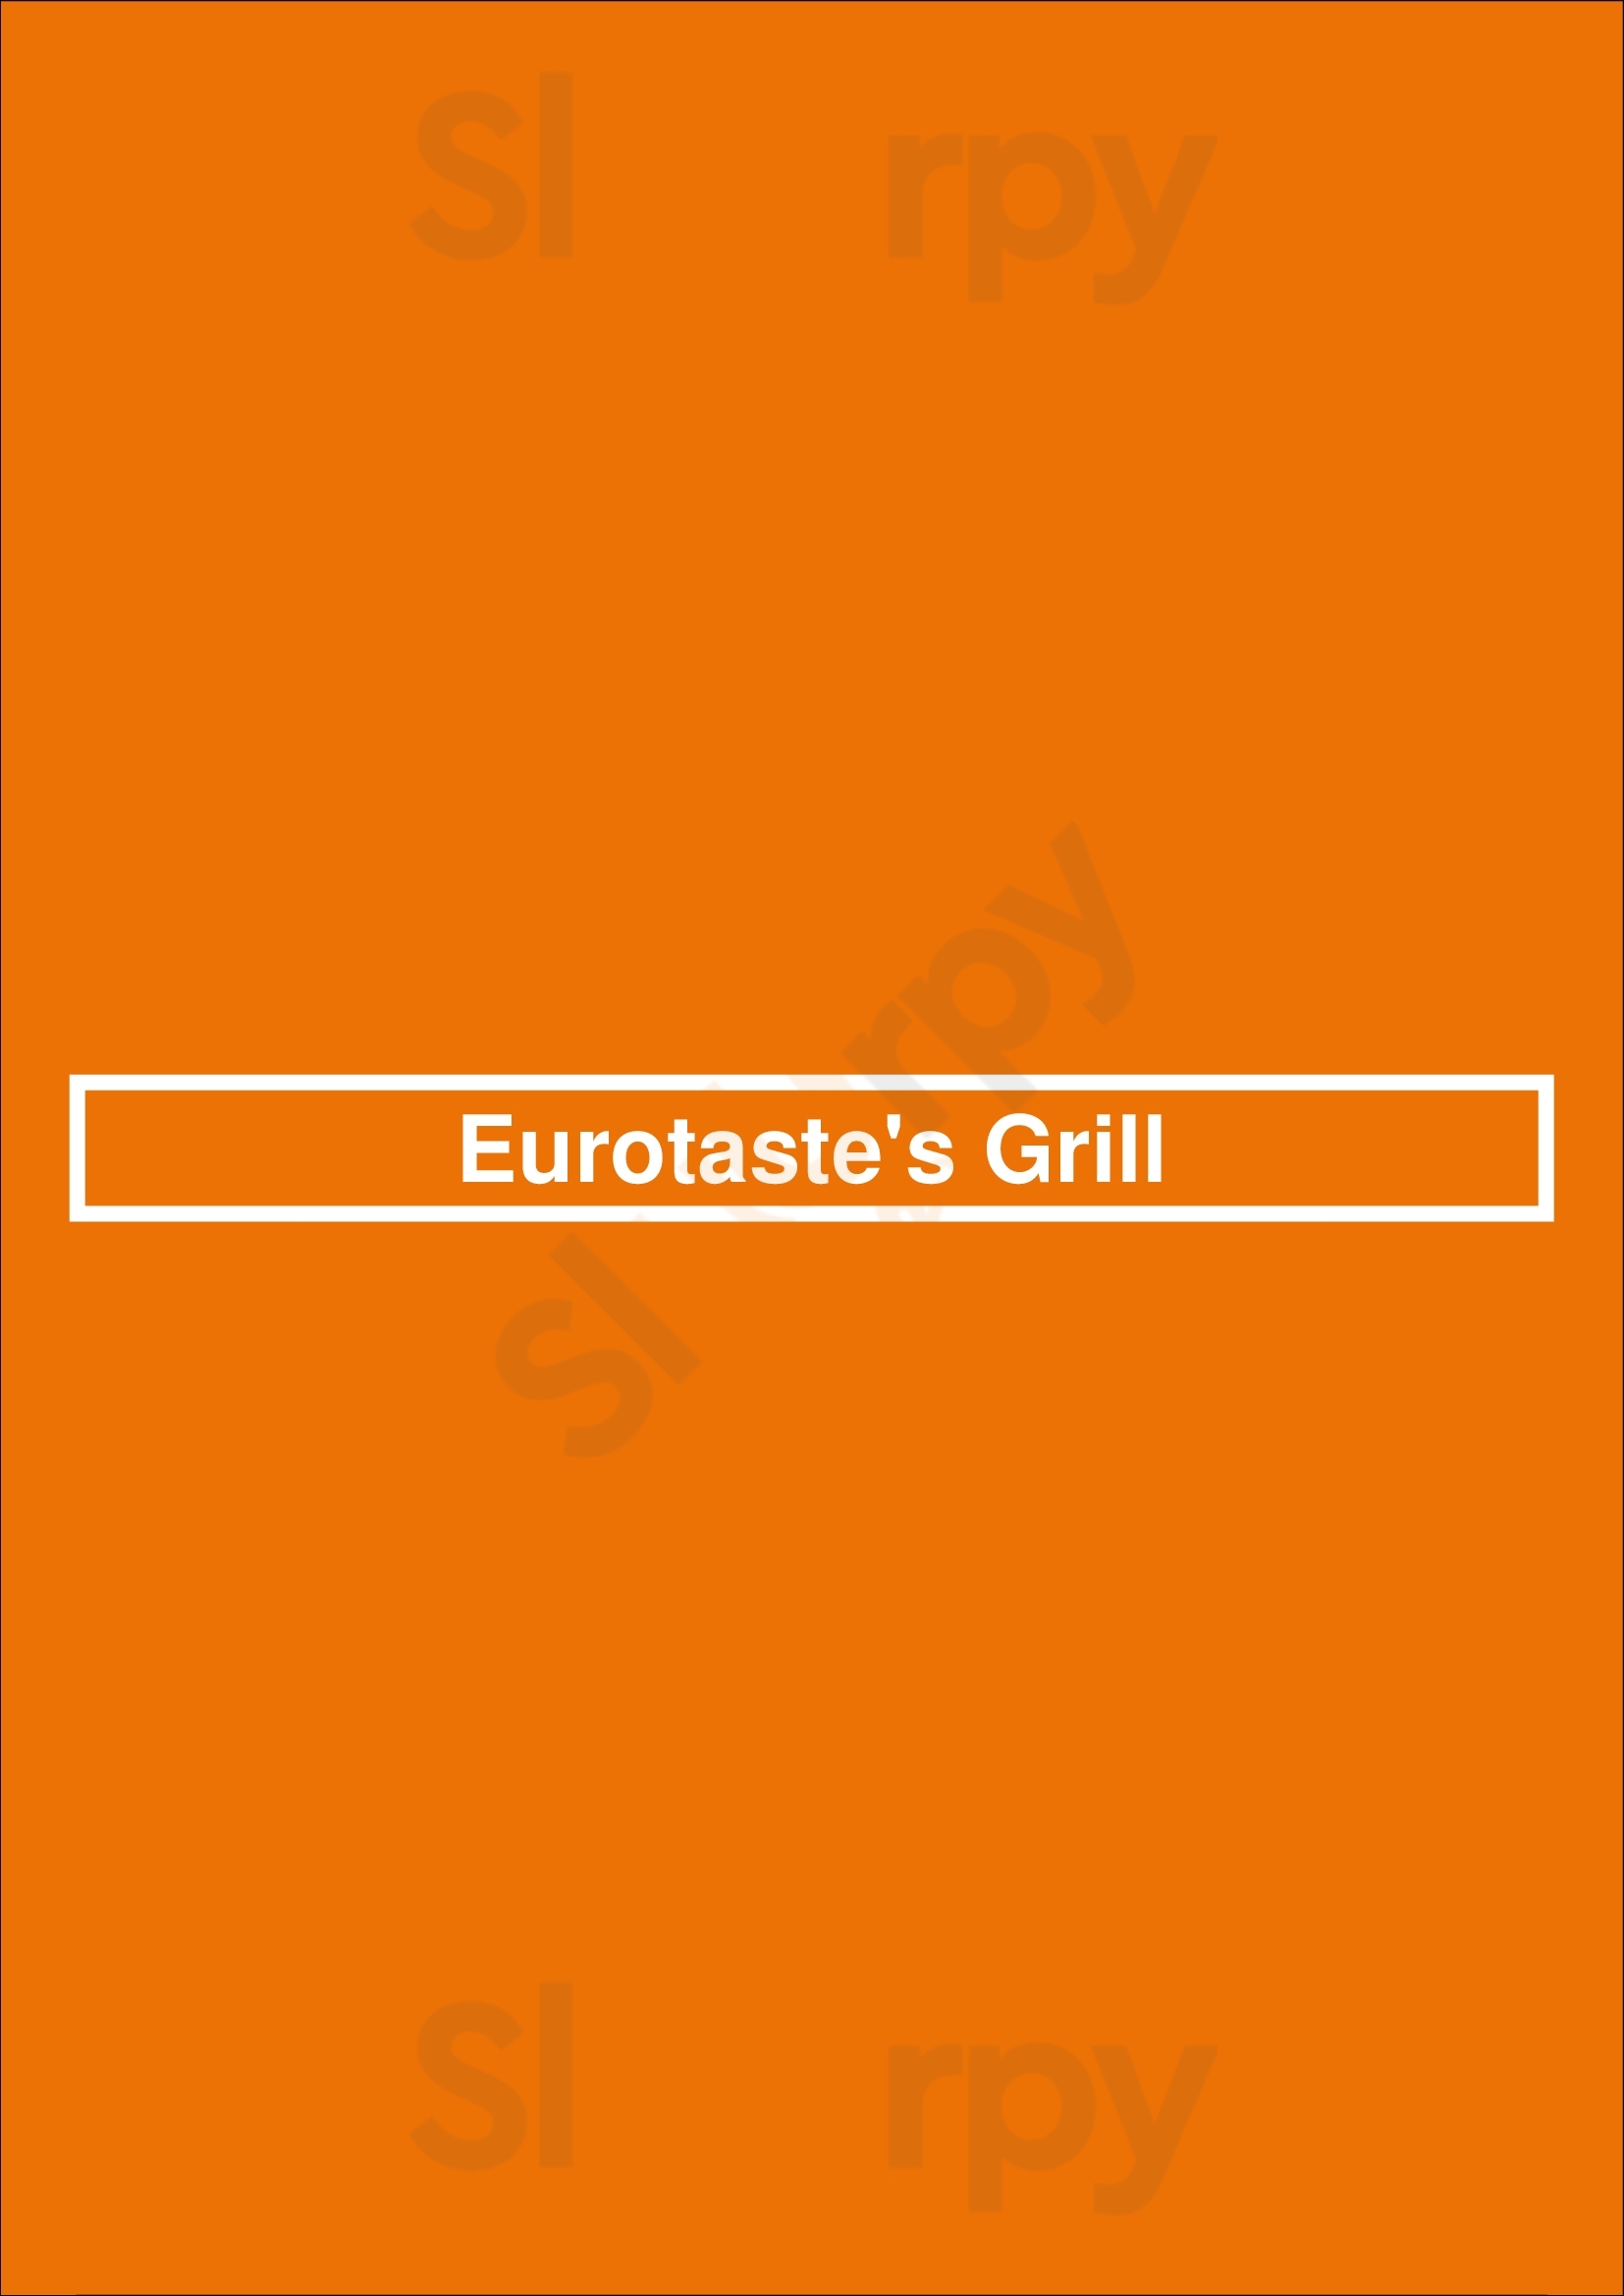 Eurotaste's Grill Bankstown Menu - 1